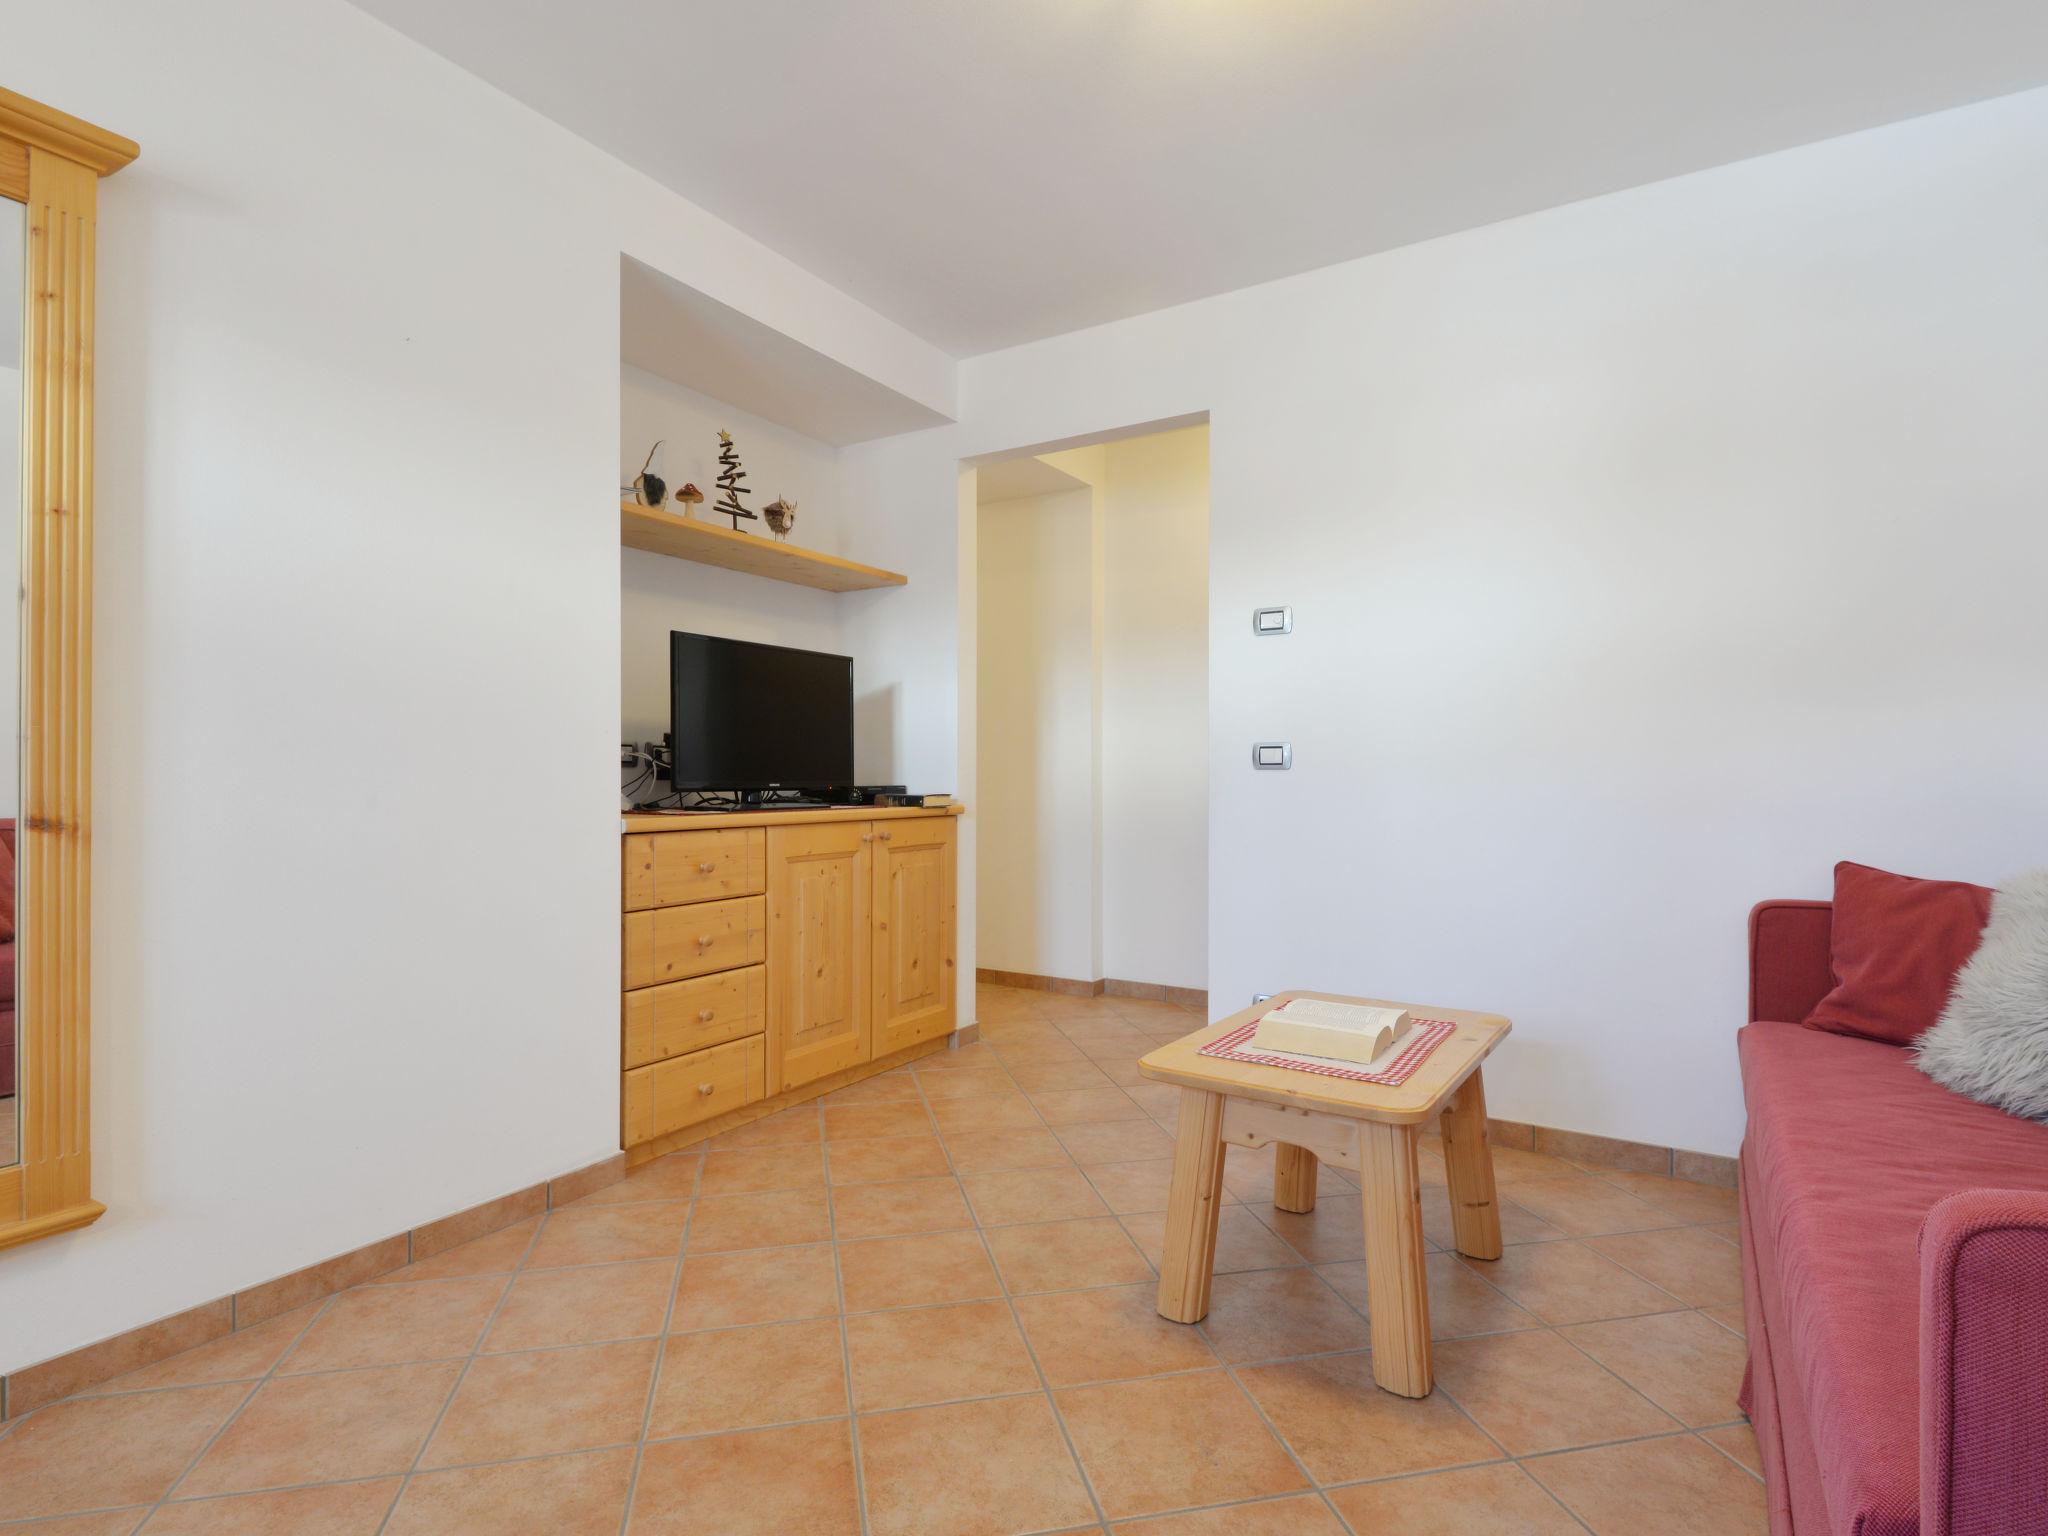 Photo 6 - Appartement de 2 chambres à San Giovanni di Fassa-Sèn Jan avec jardin